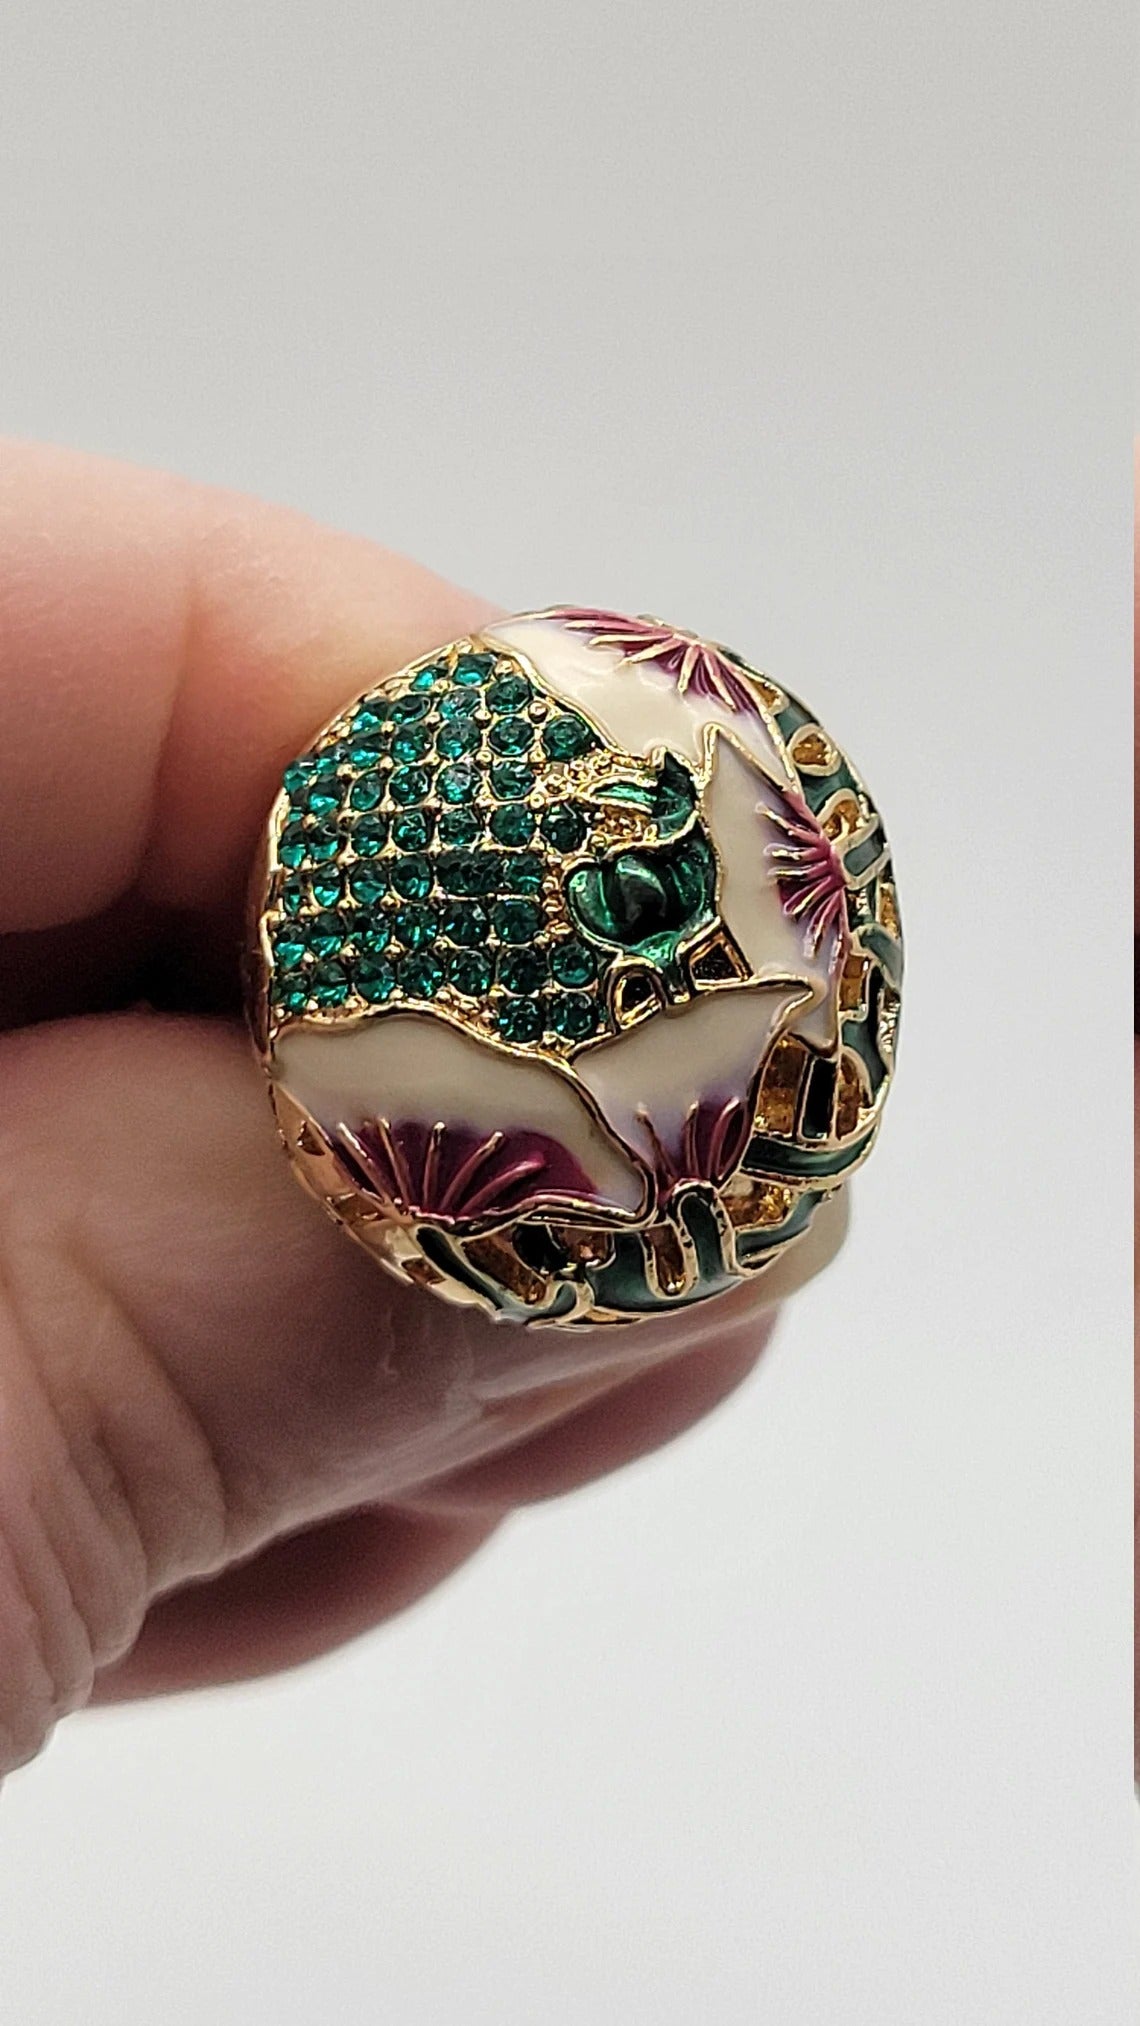 Stunning Chinese Hand-Painted Lotus Flower Ring